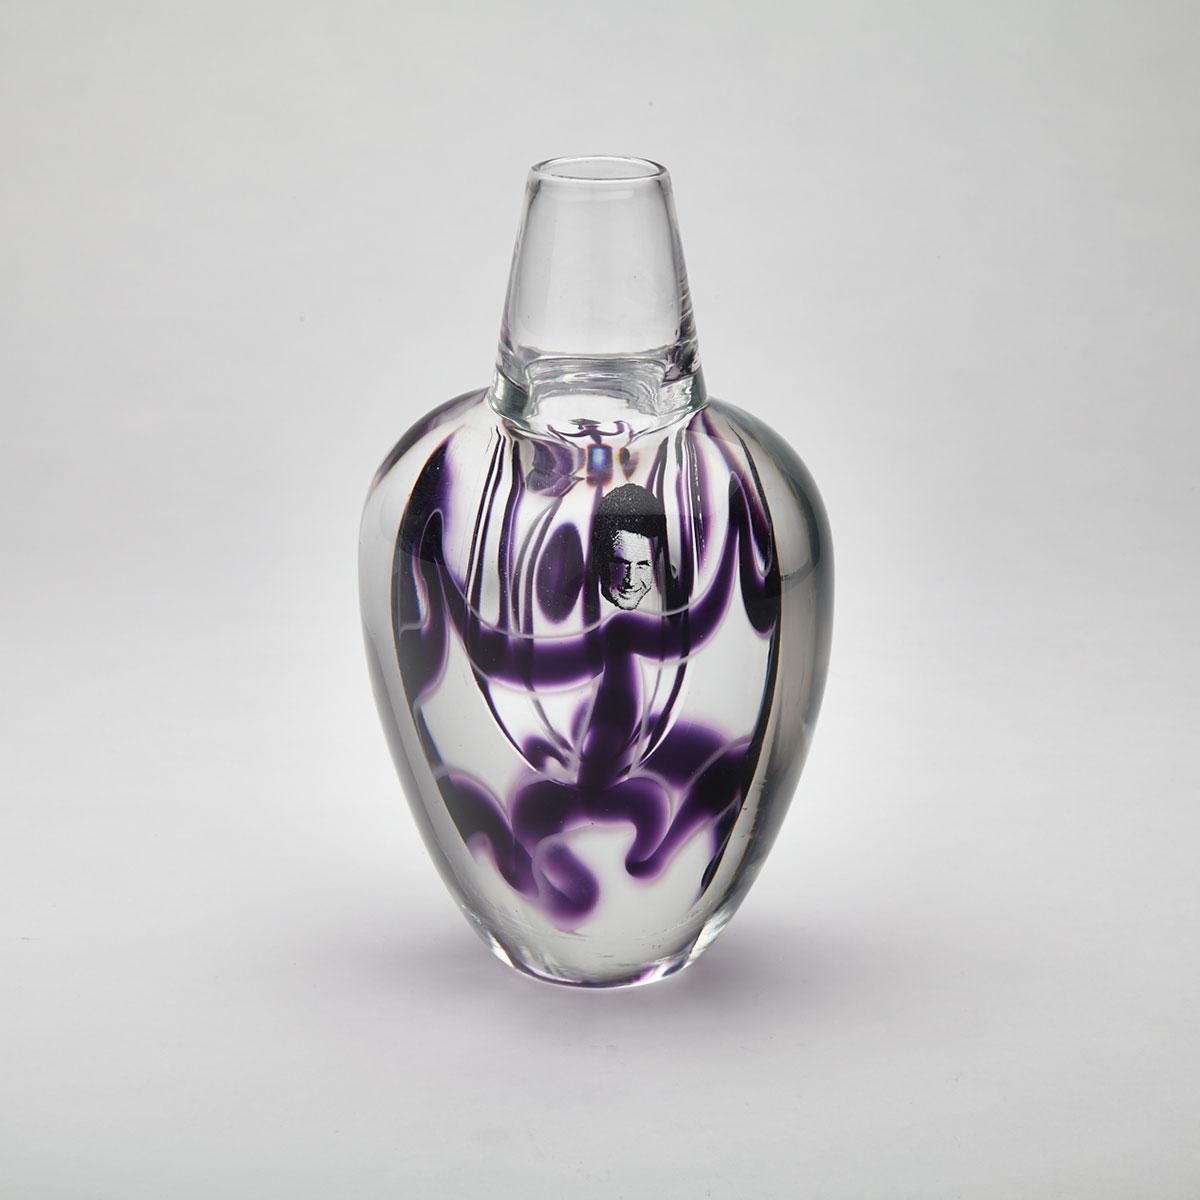 Toan Klein (American/Canadian, b.1949), Glass Vase, c.1990